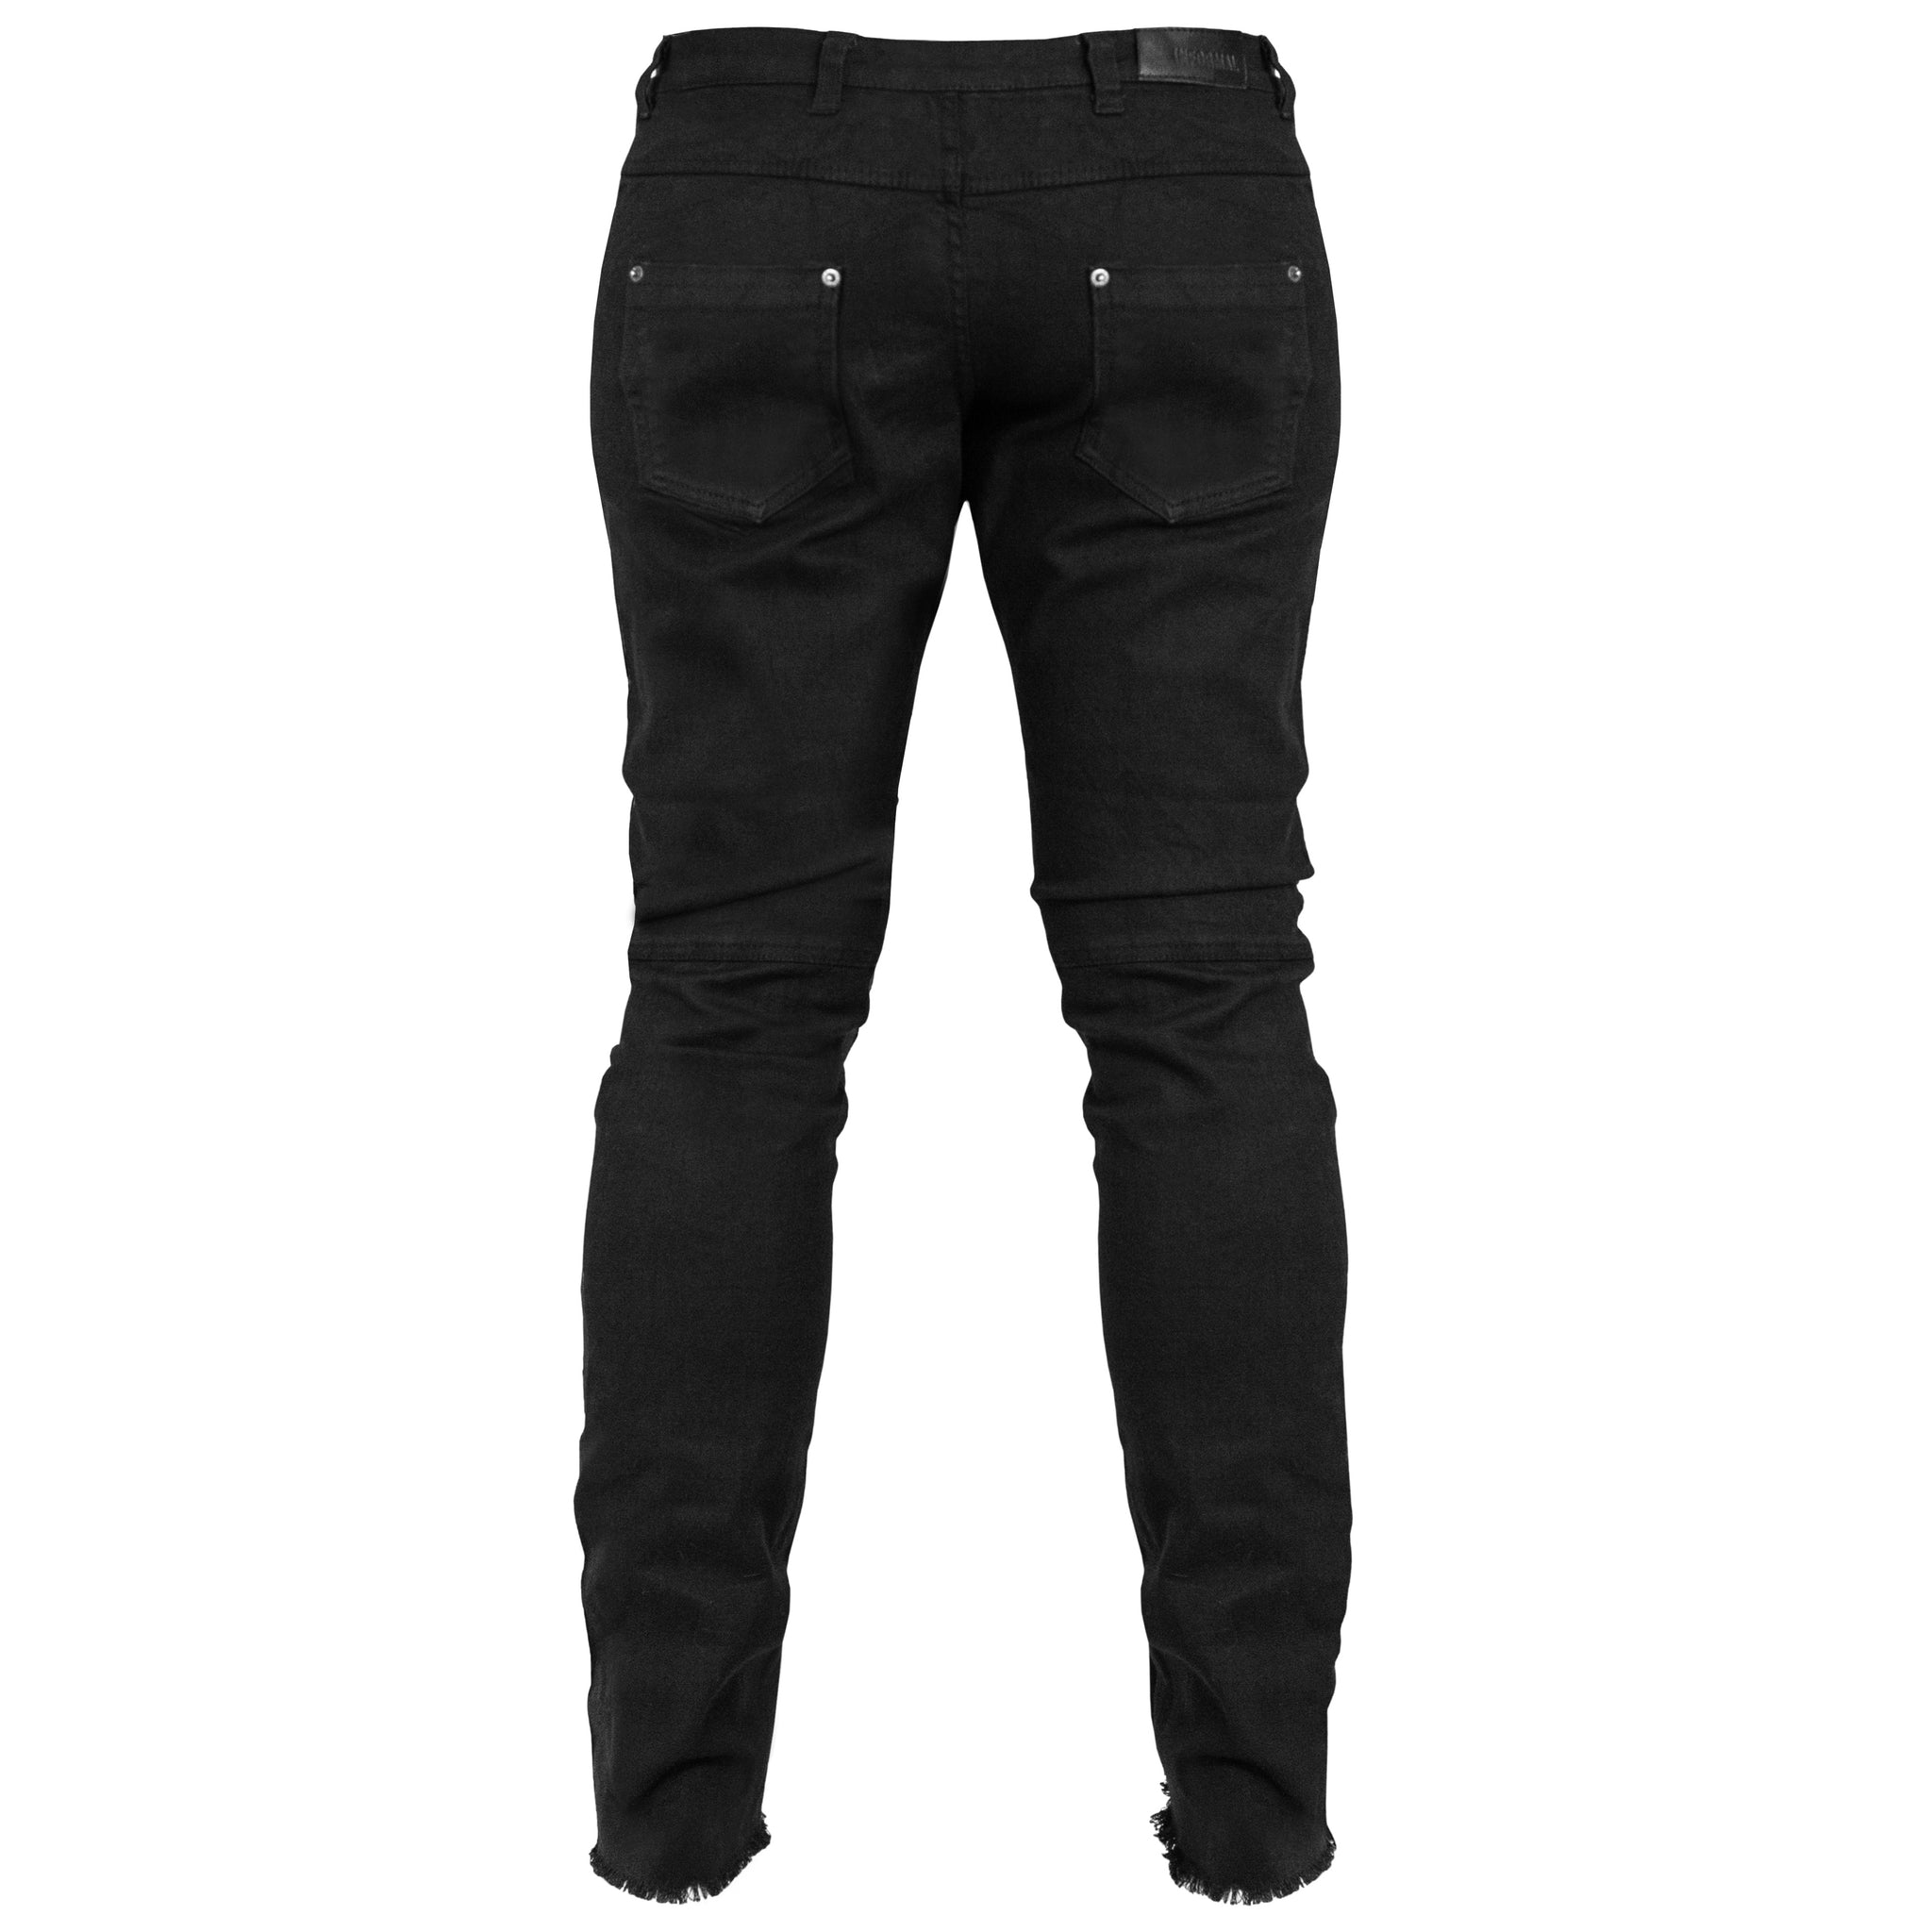 Streuth Jeans : Black